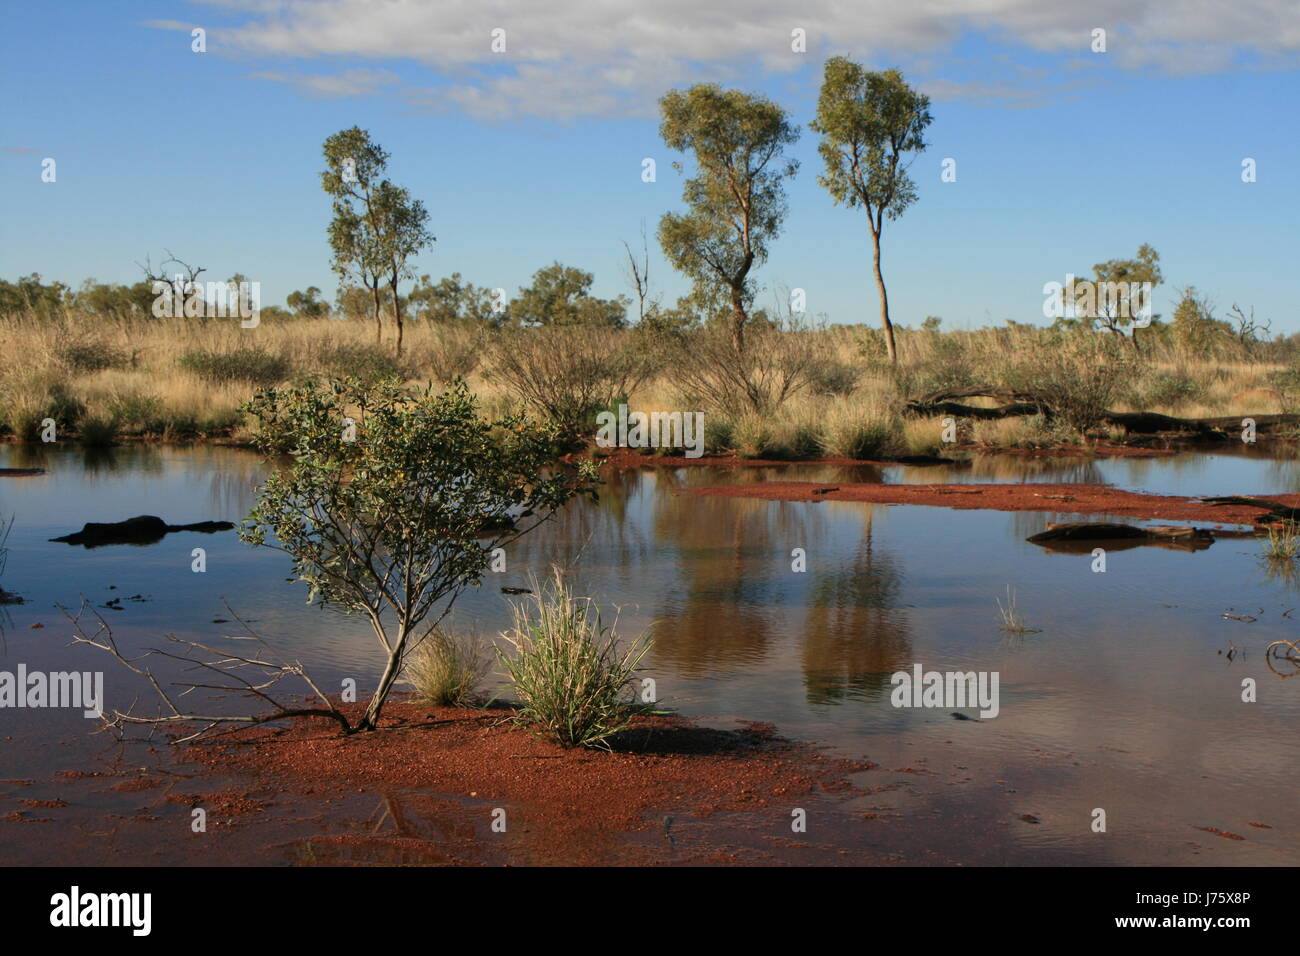 Fryse Styring log australia outback rainy season scenery countryside nature water australia  Stock Photo - Alamy